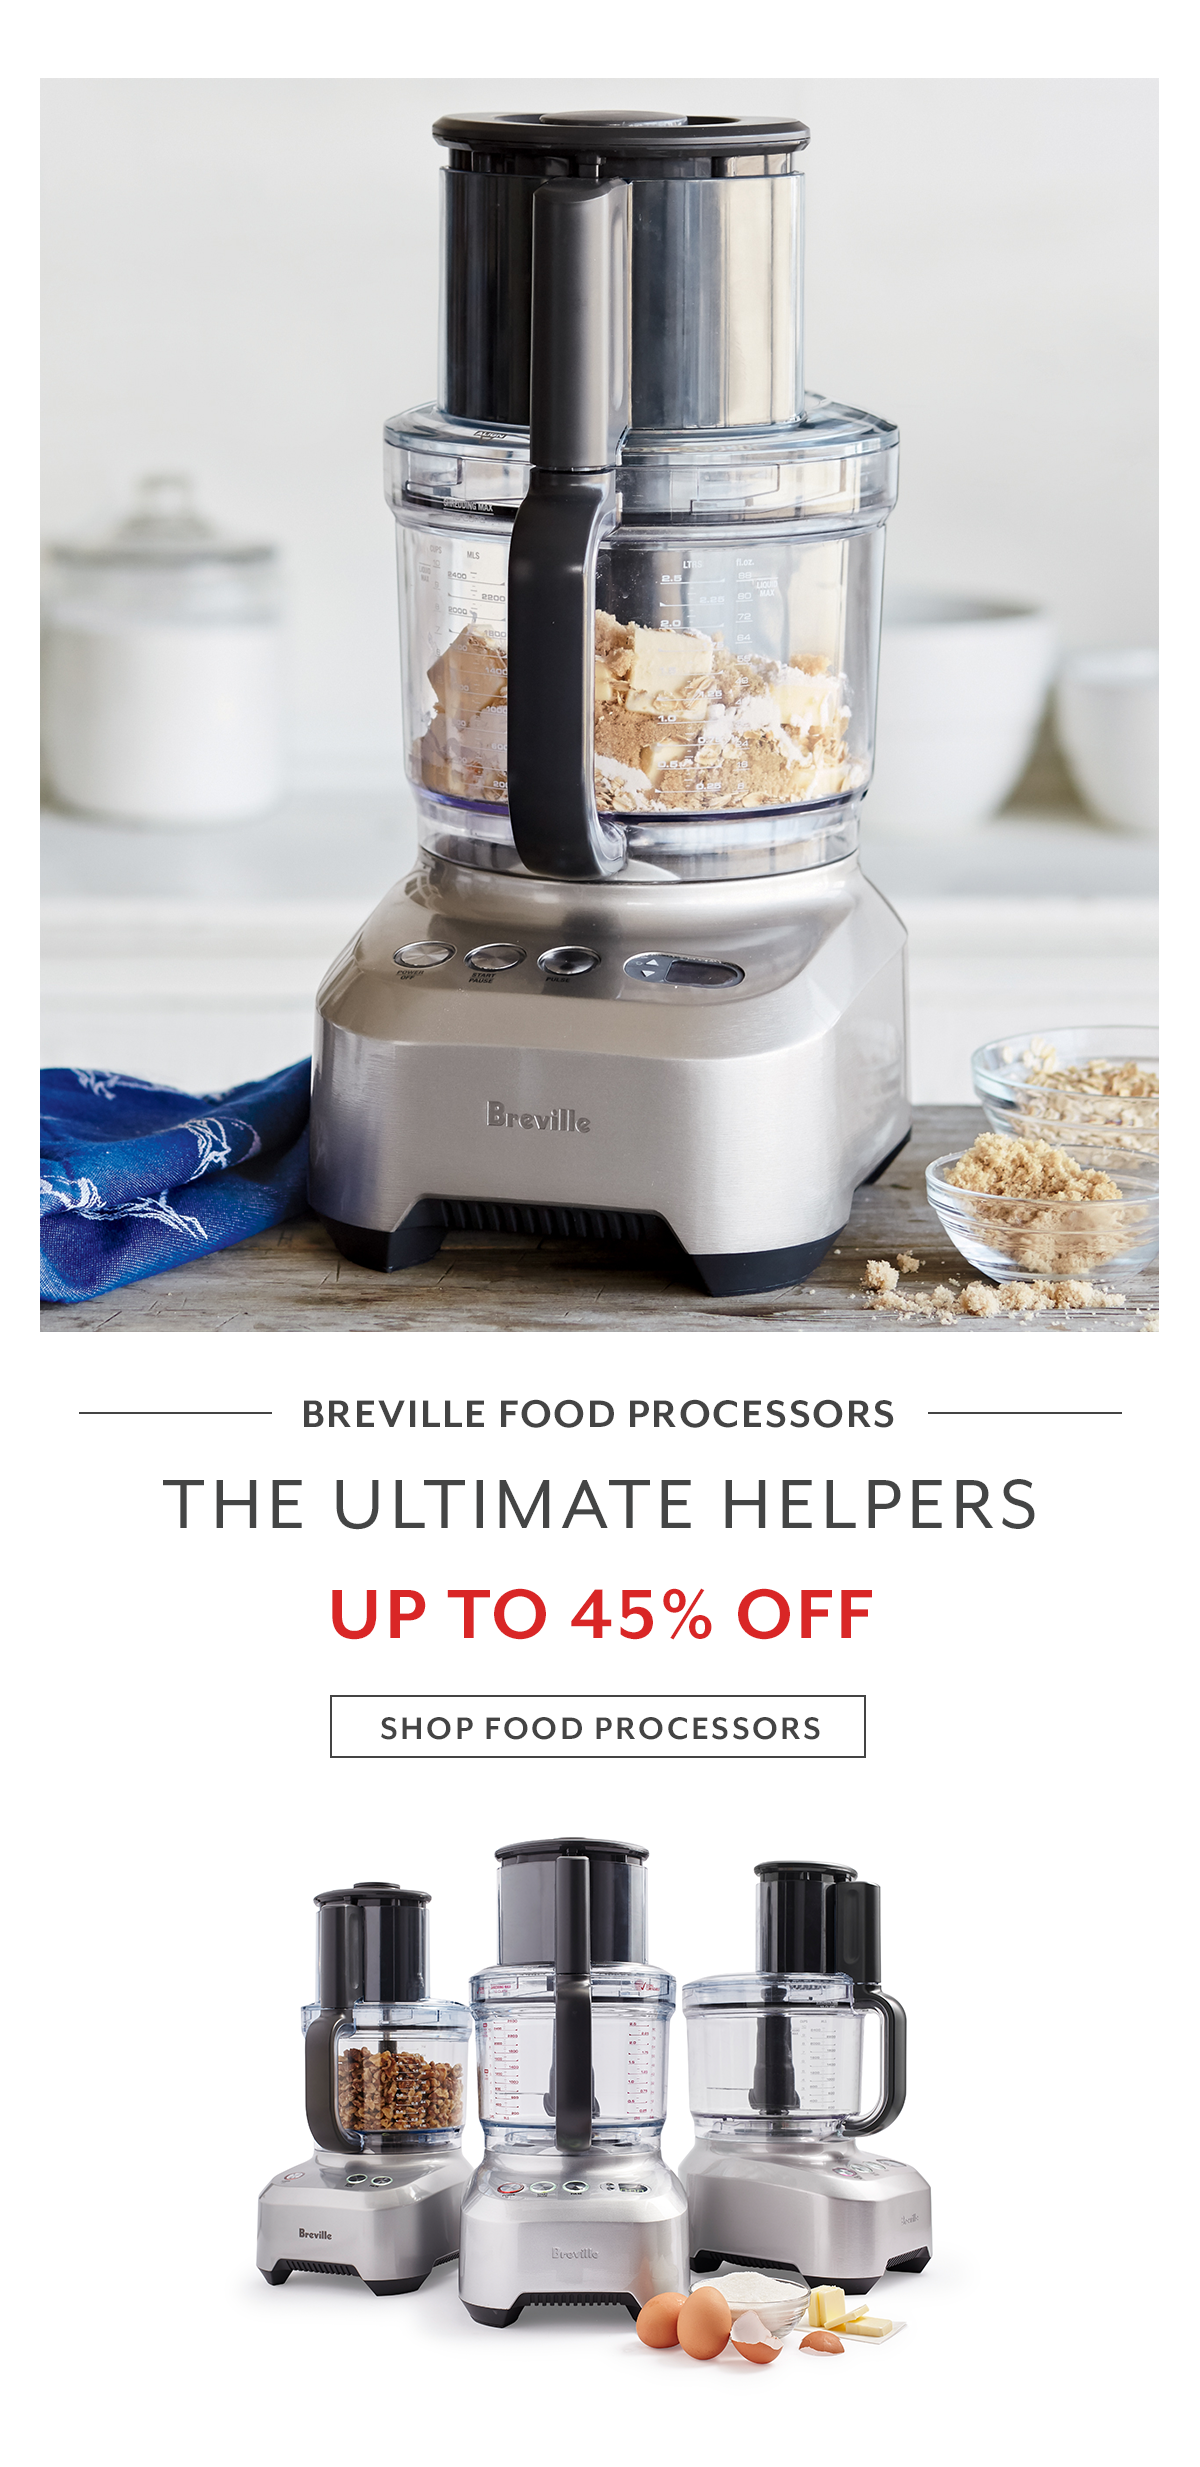 Breville Food Processors